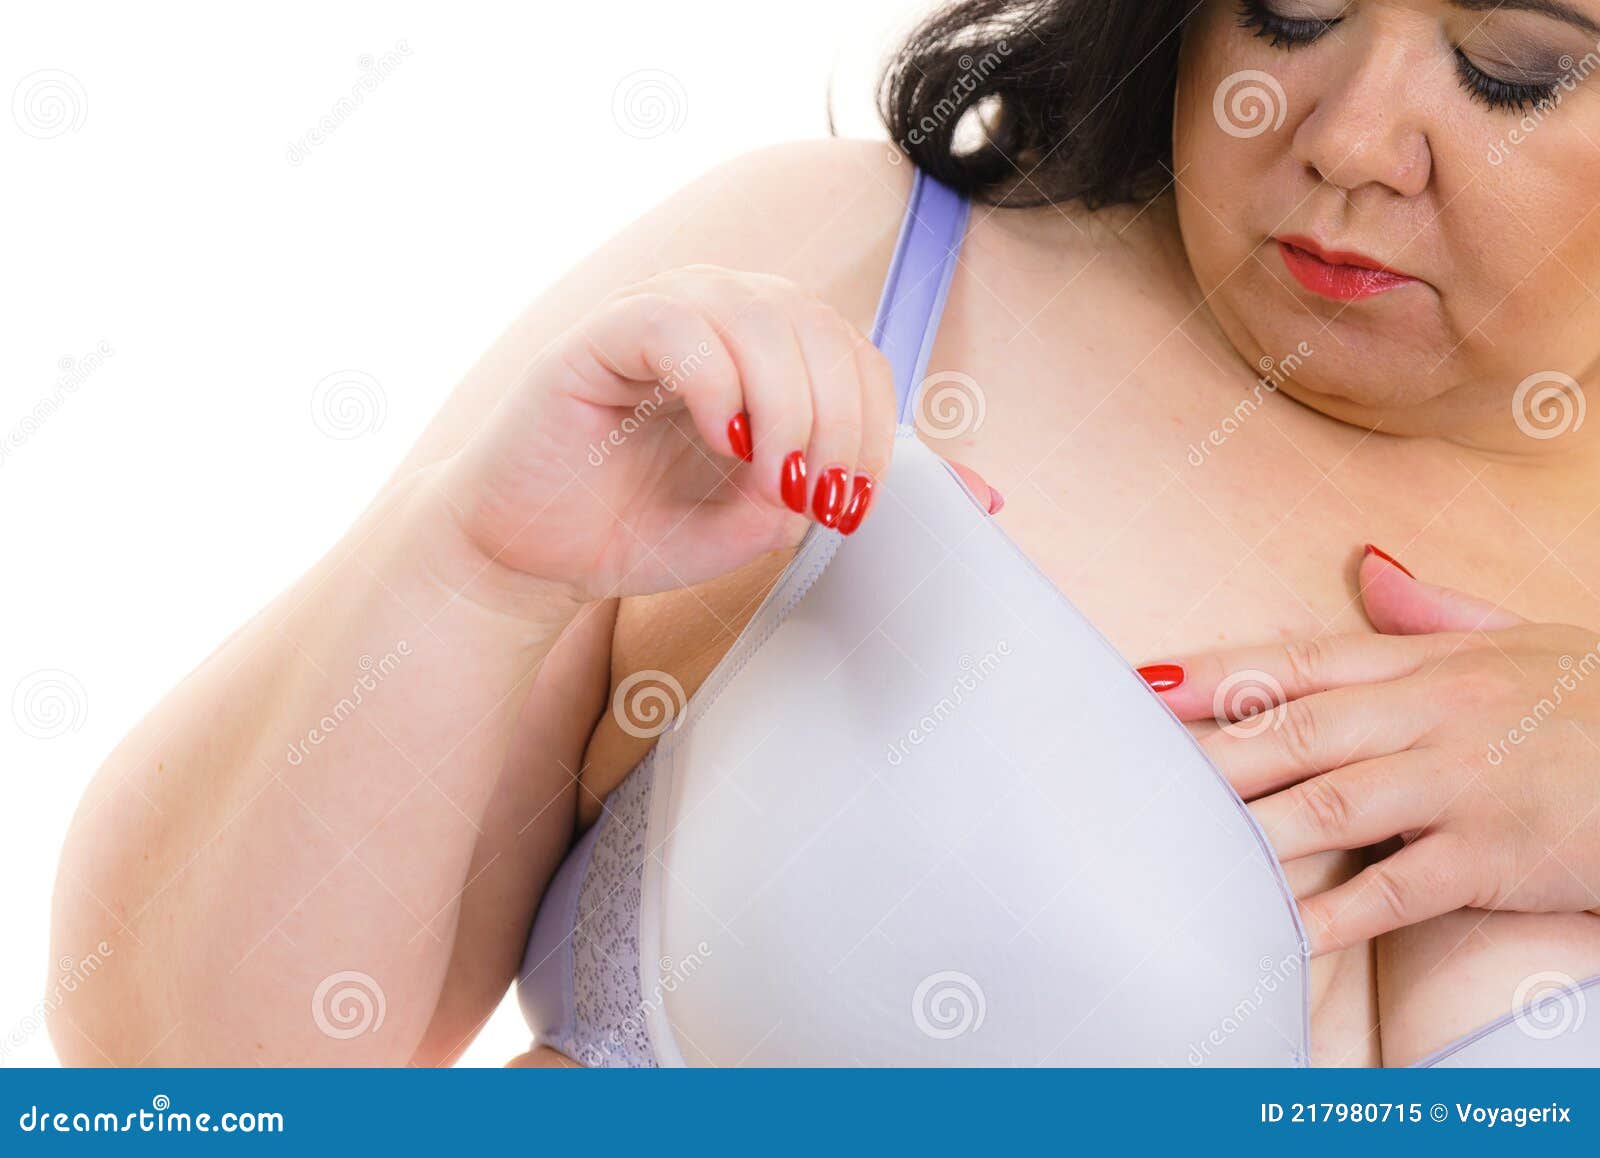 Fat Woman Big Breast Wearing Bra Stock Image - Image of touching